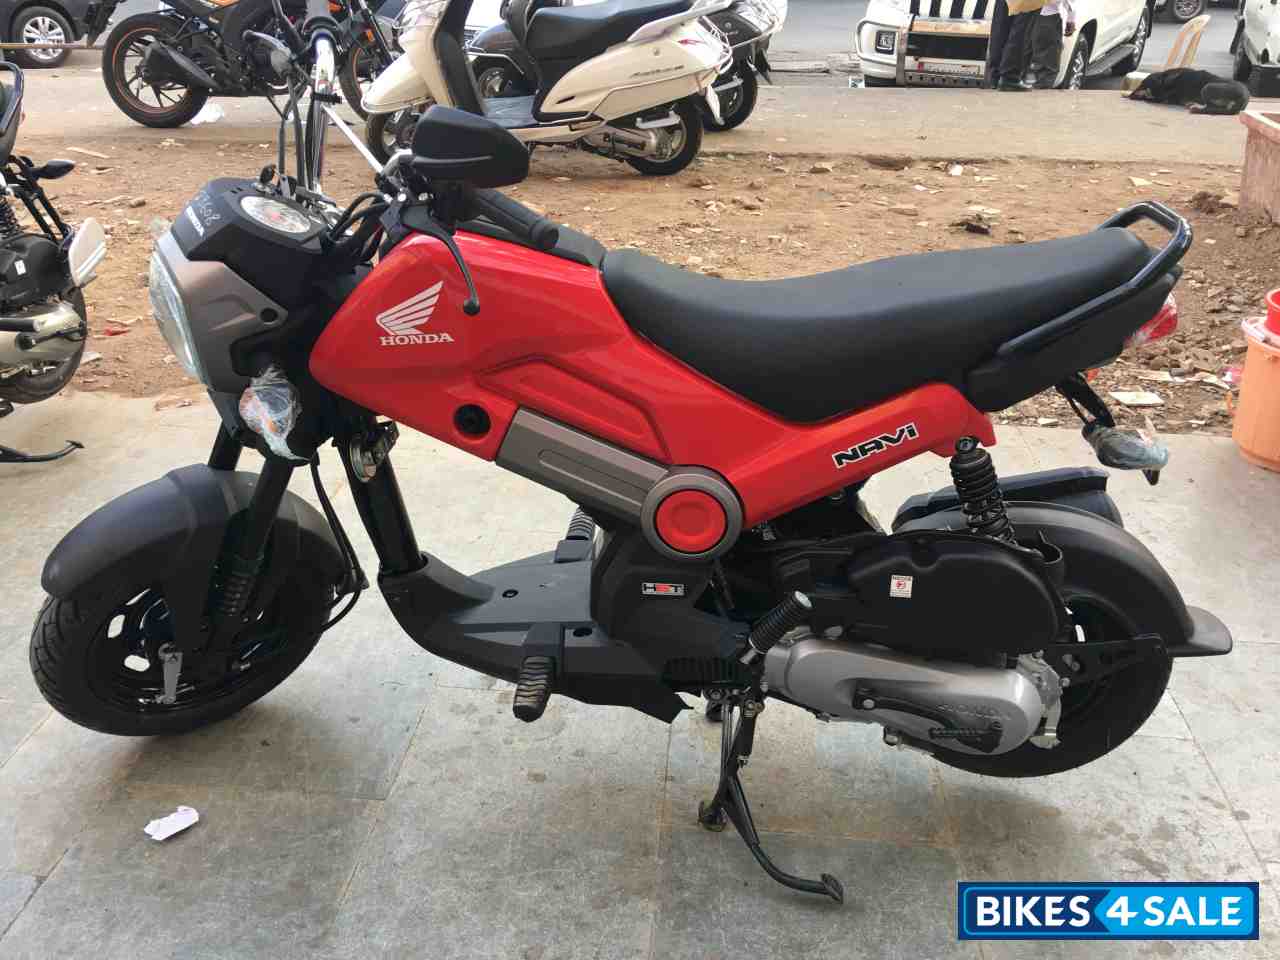 Black & Red Honda Navi Street Picture 1. Bike ID 145182. Bike located